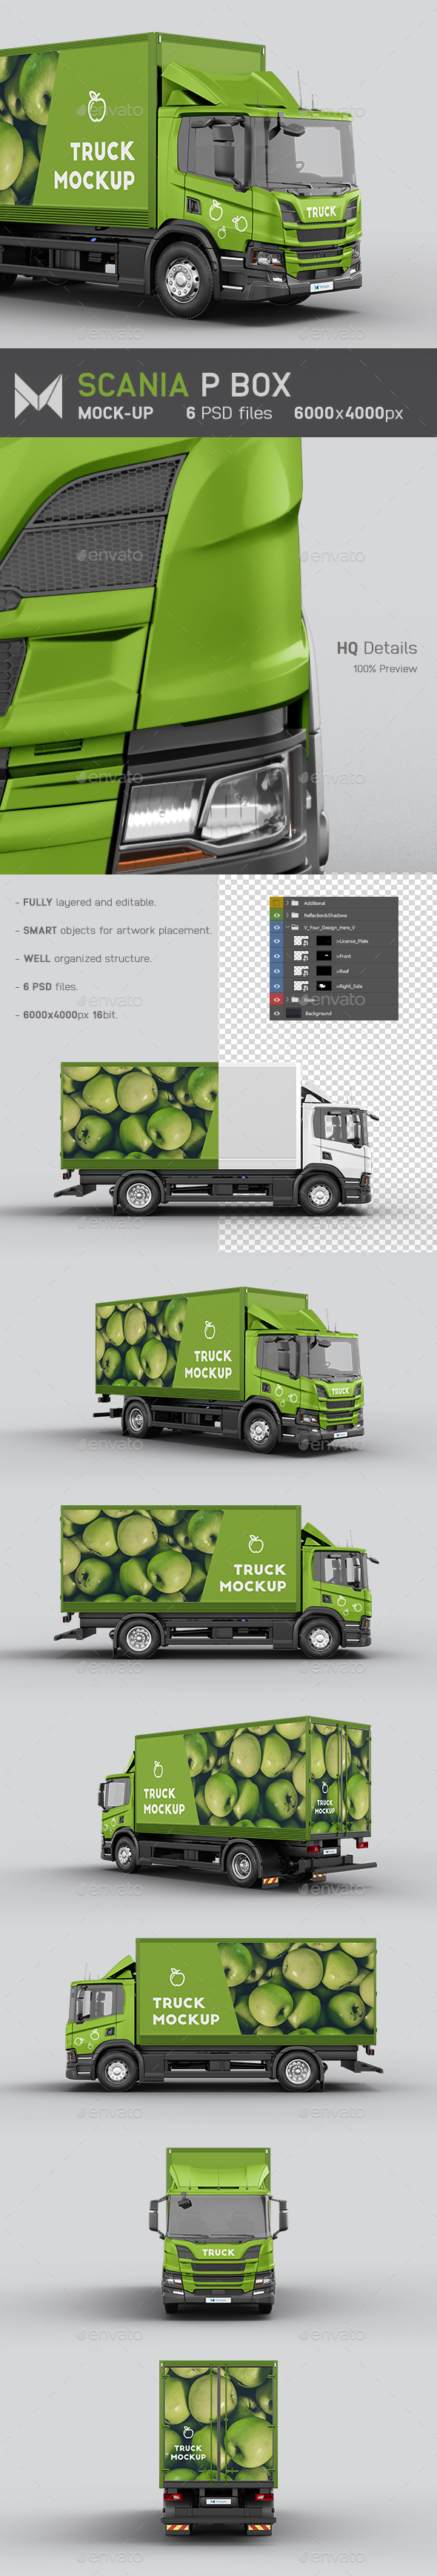 Scania P Box Truck Mockup